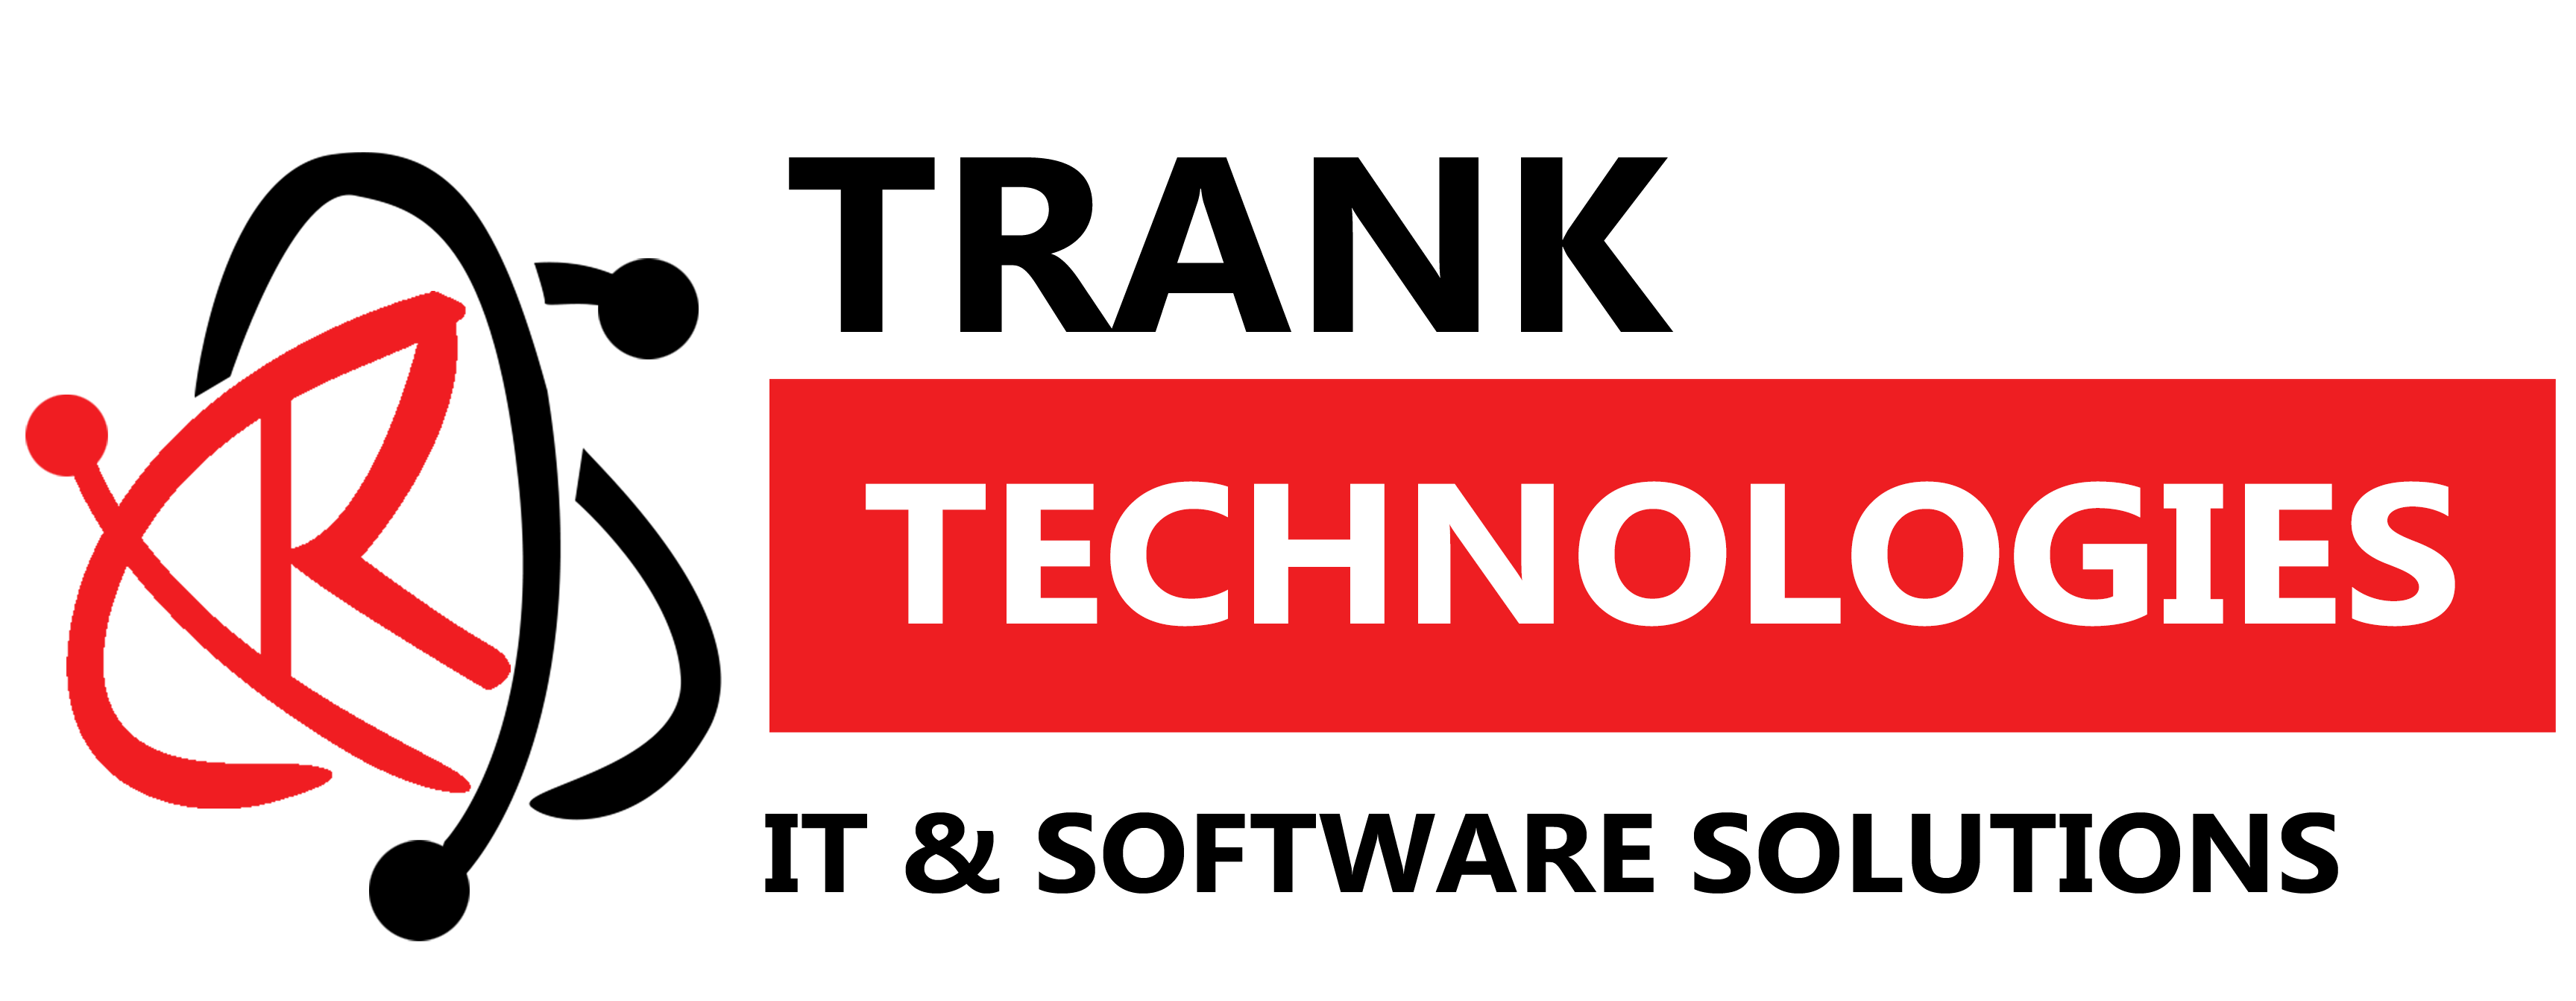 Trank Technologies Logo